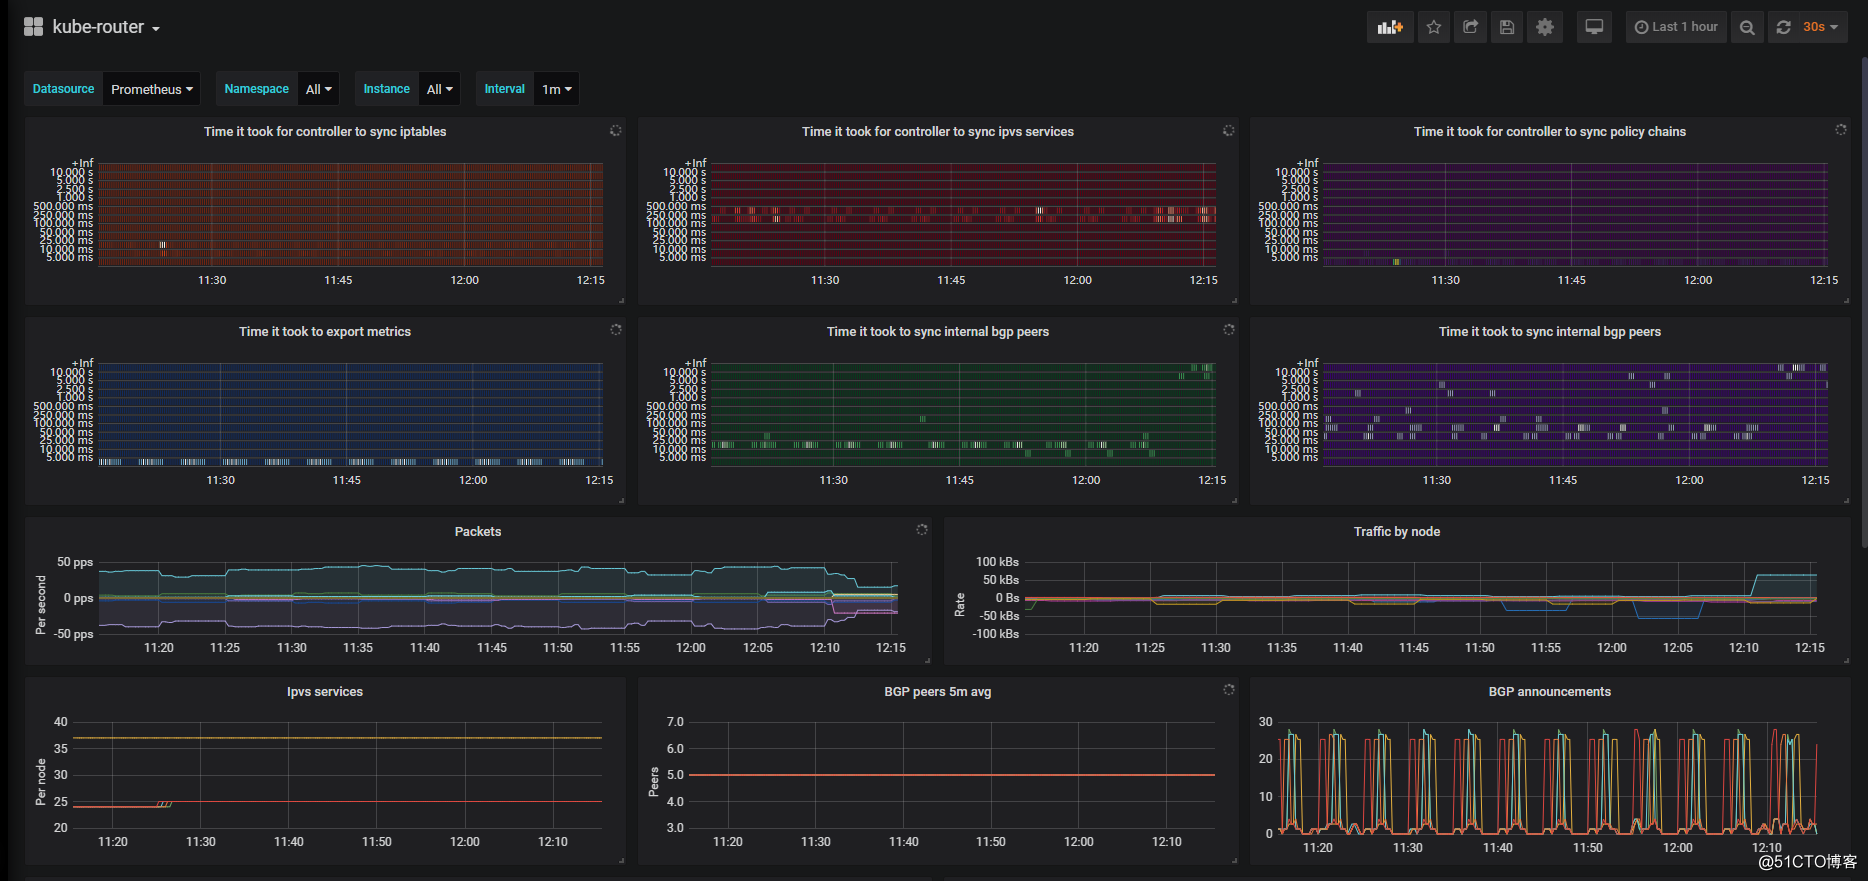 Based Kubernetes v1.14.0 deployment of node-exporter series of monitoring